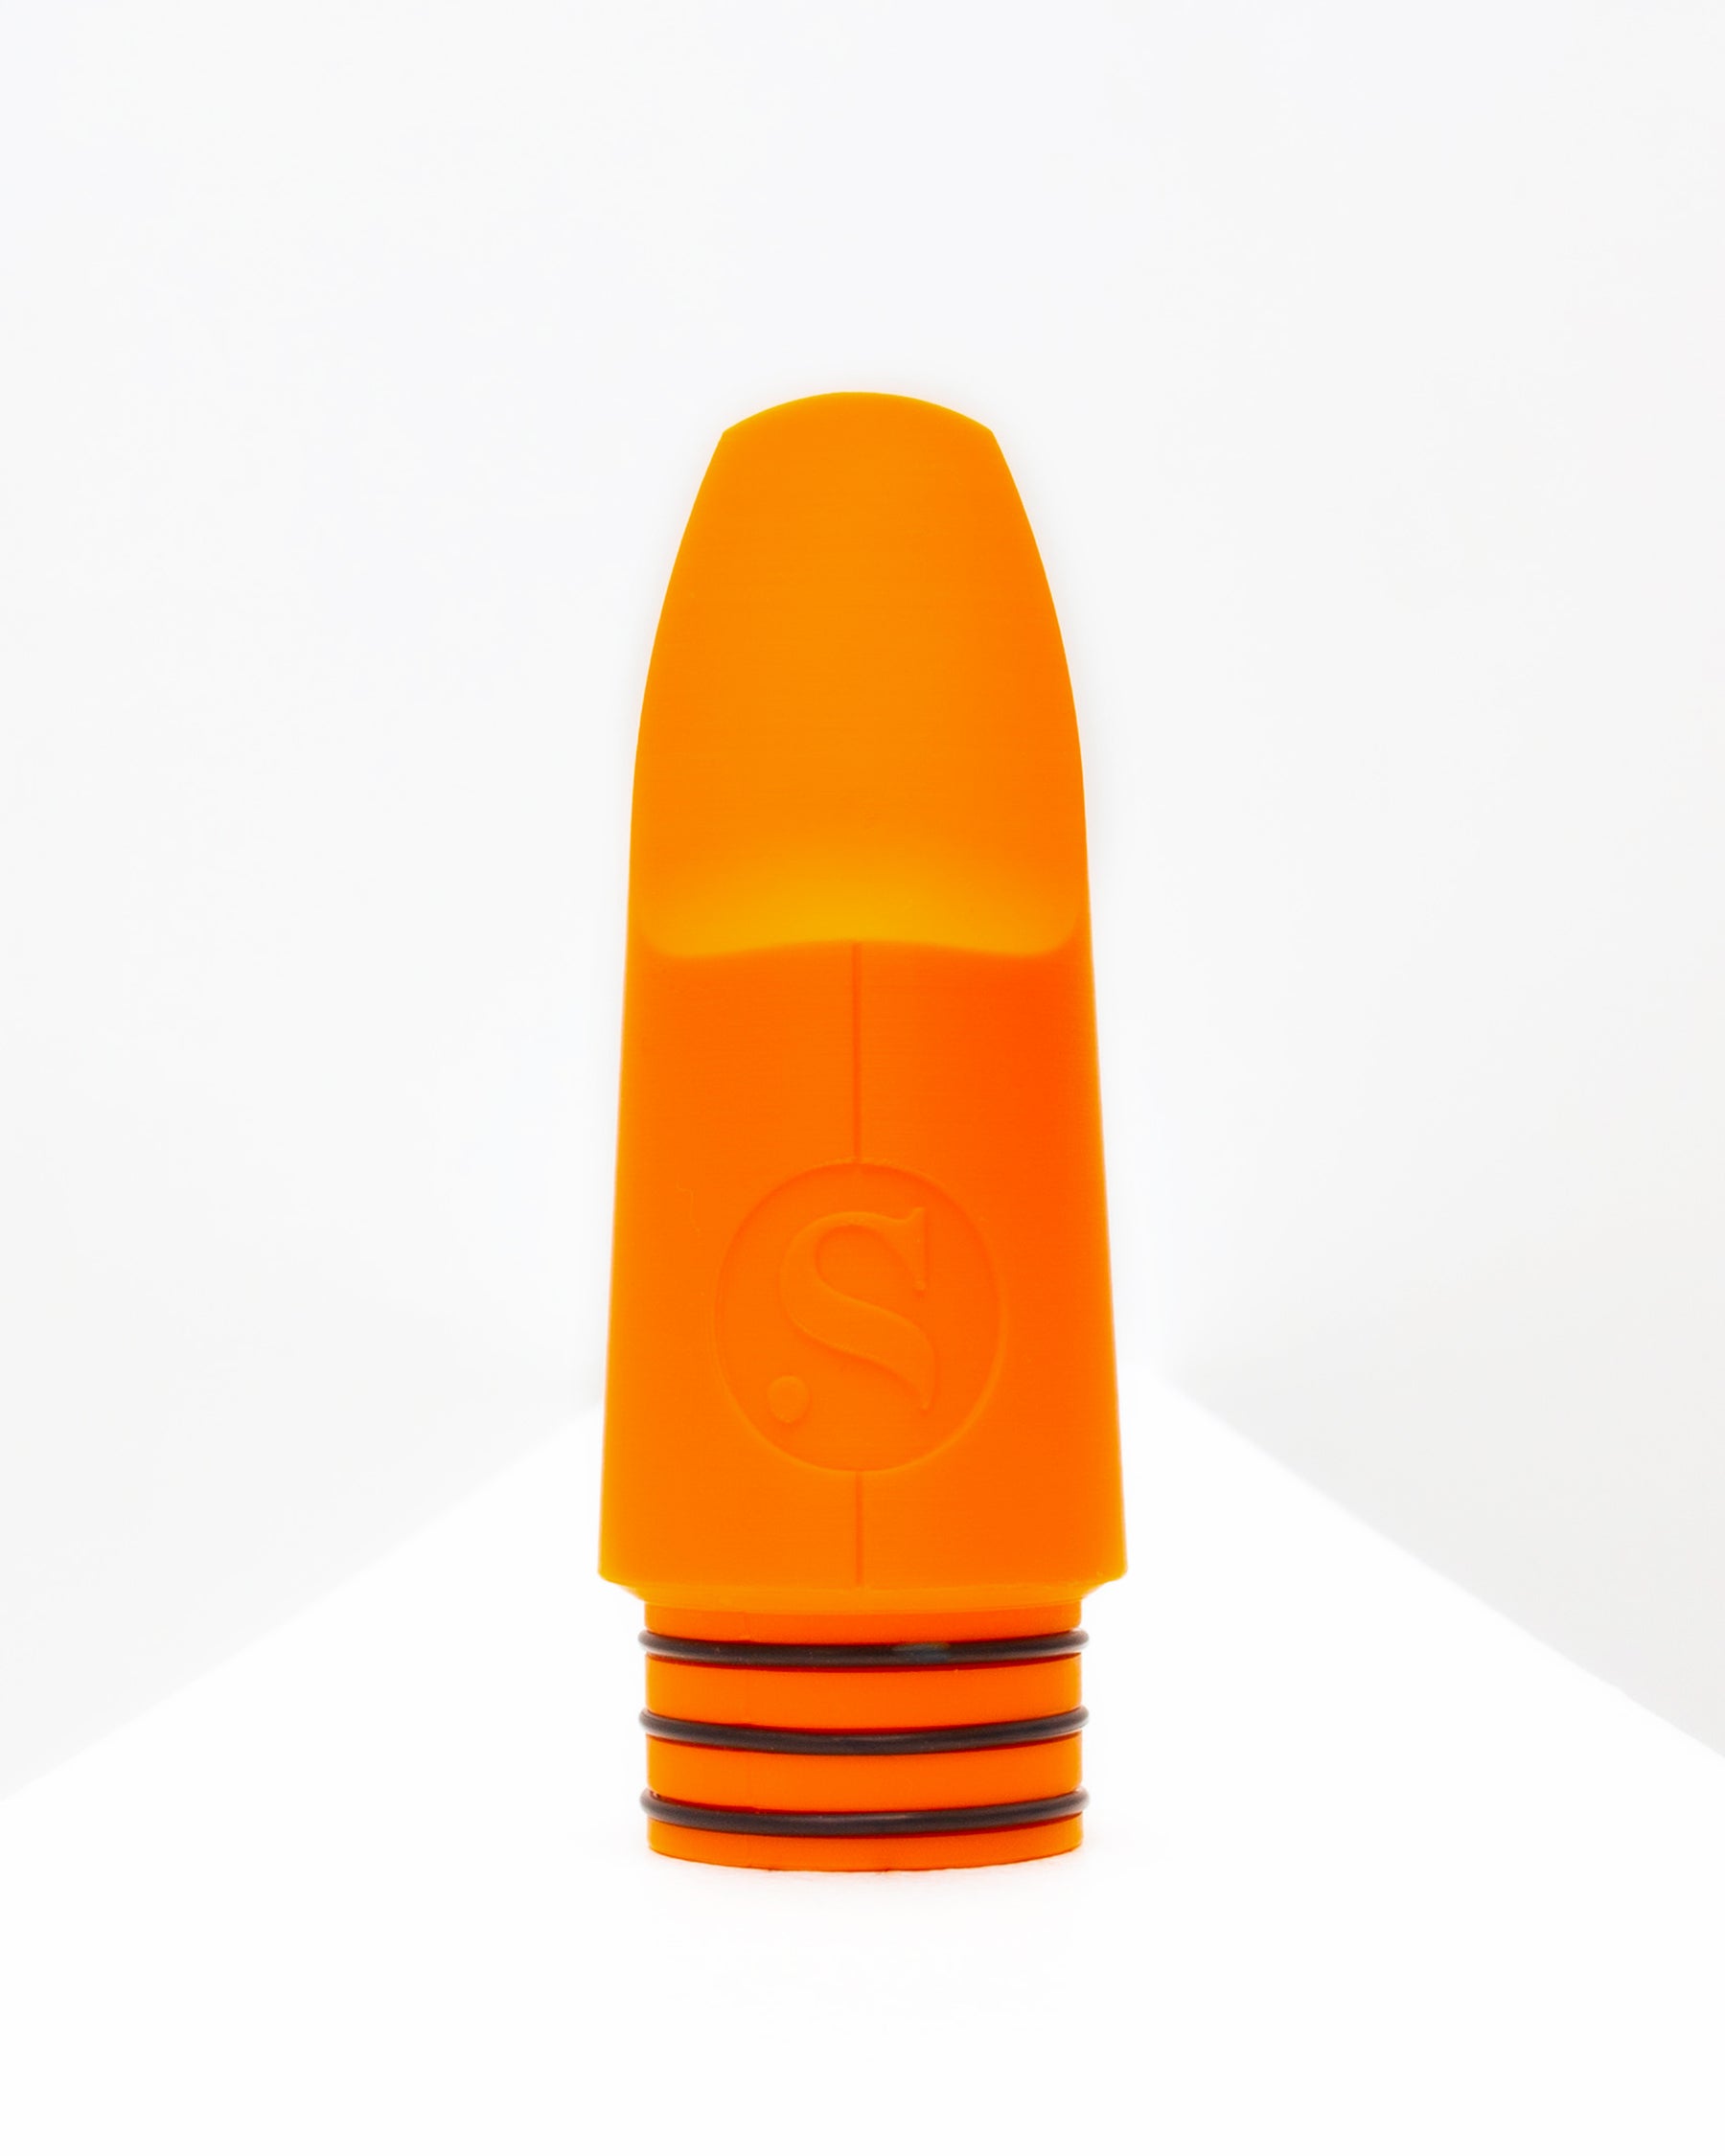 Bass Signature Clarinet mouthpiece - Insaneintherain by Syos - Lava Orange